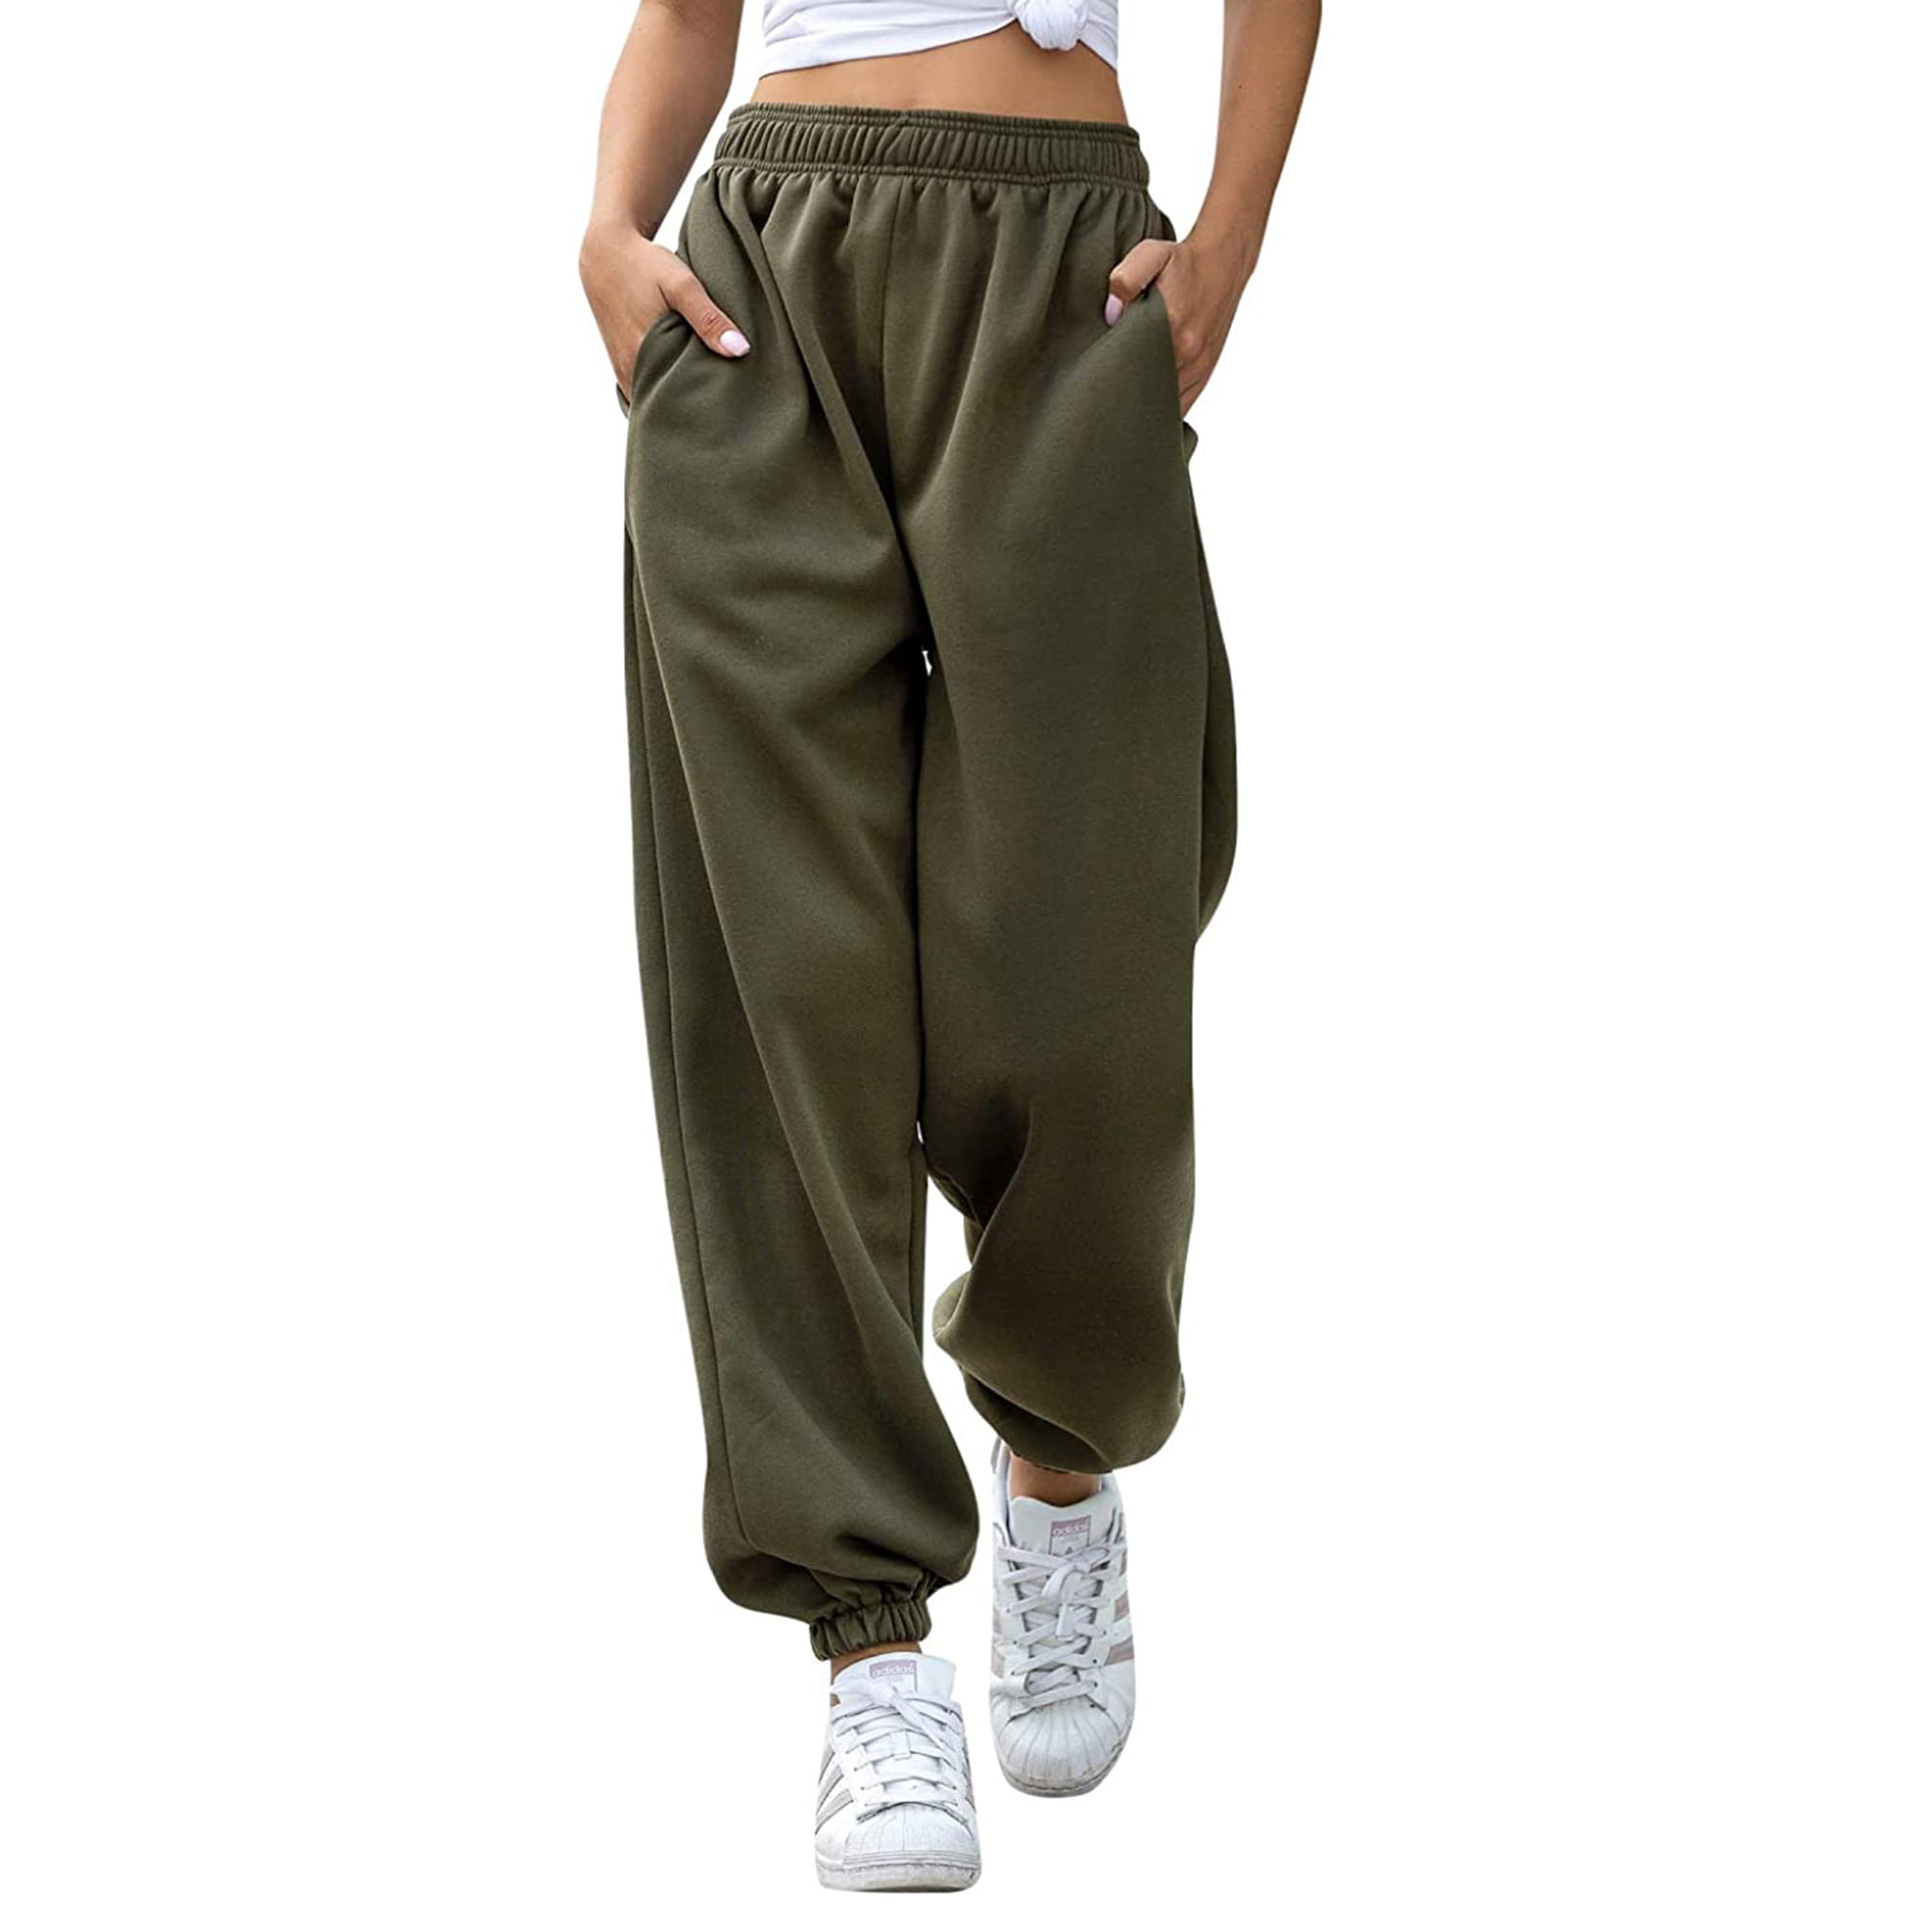 Pantalones casuales de mujer, pantalones deportivos de baile hip-hop  absorbentes de sudor transpirables largos Nituyy GL714-FF50371D1